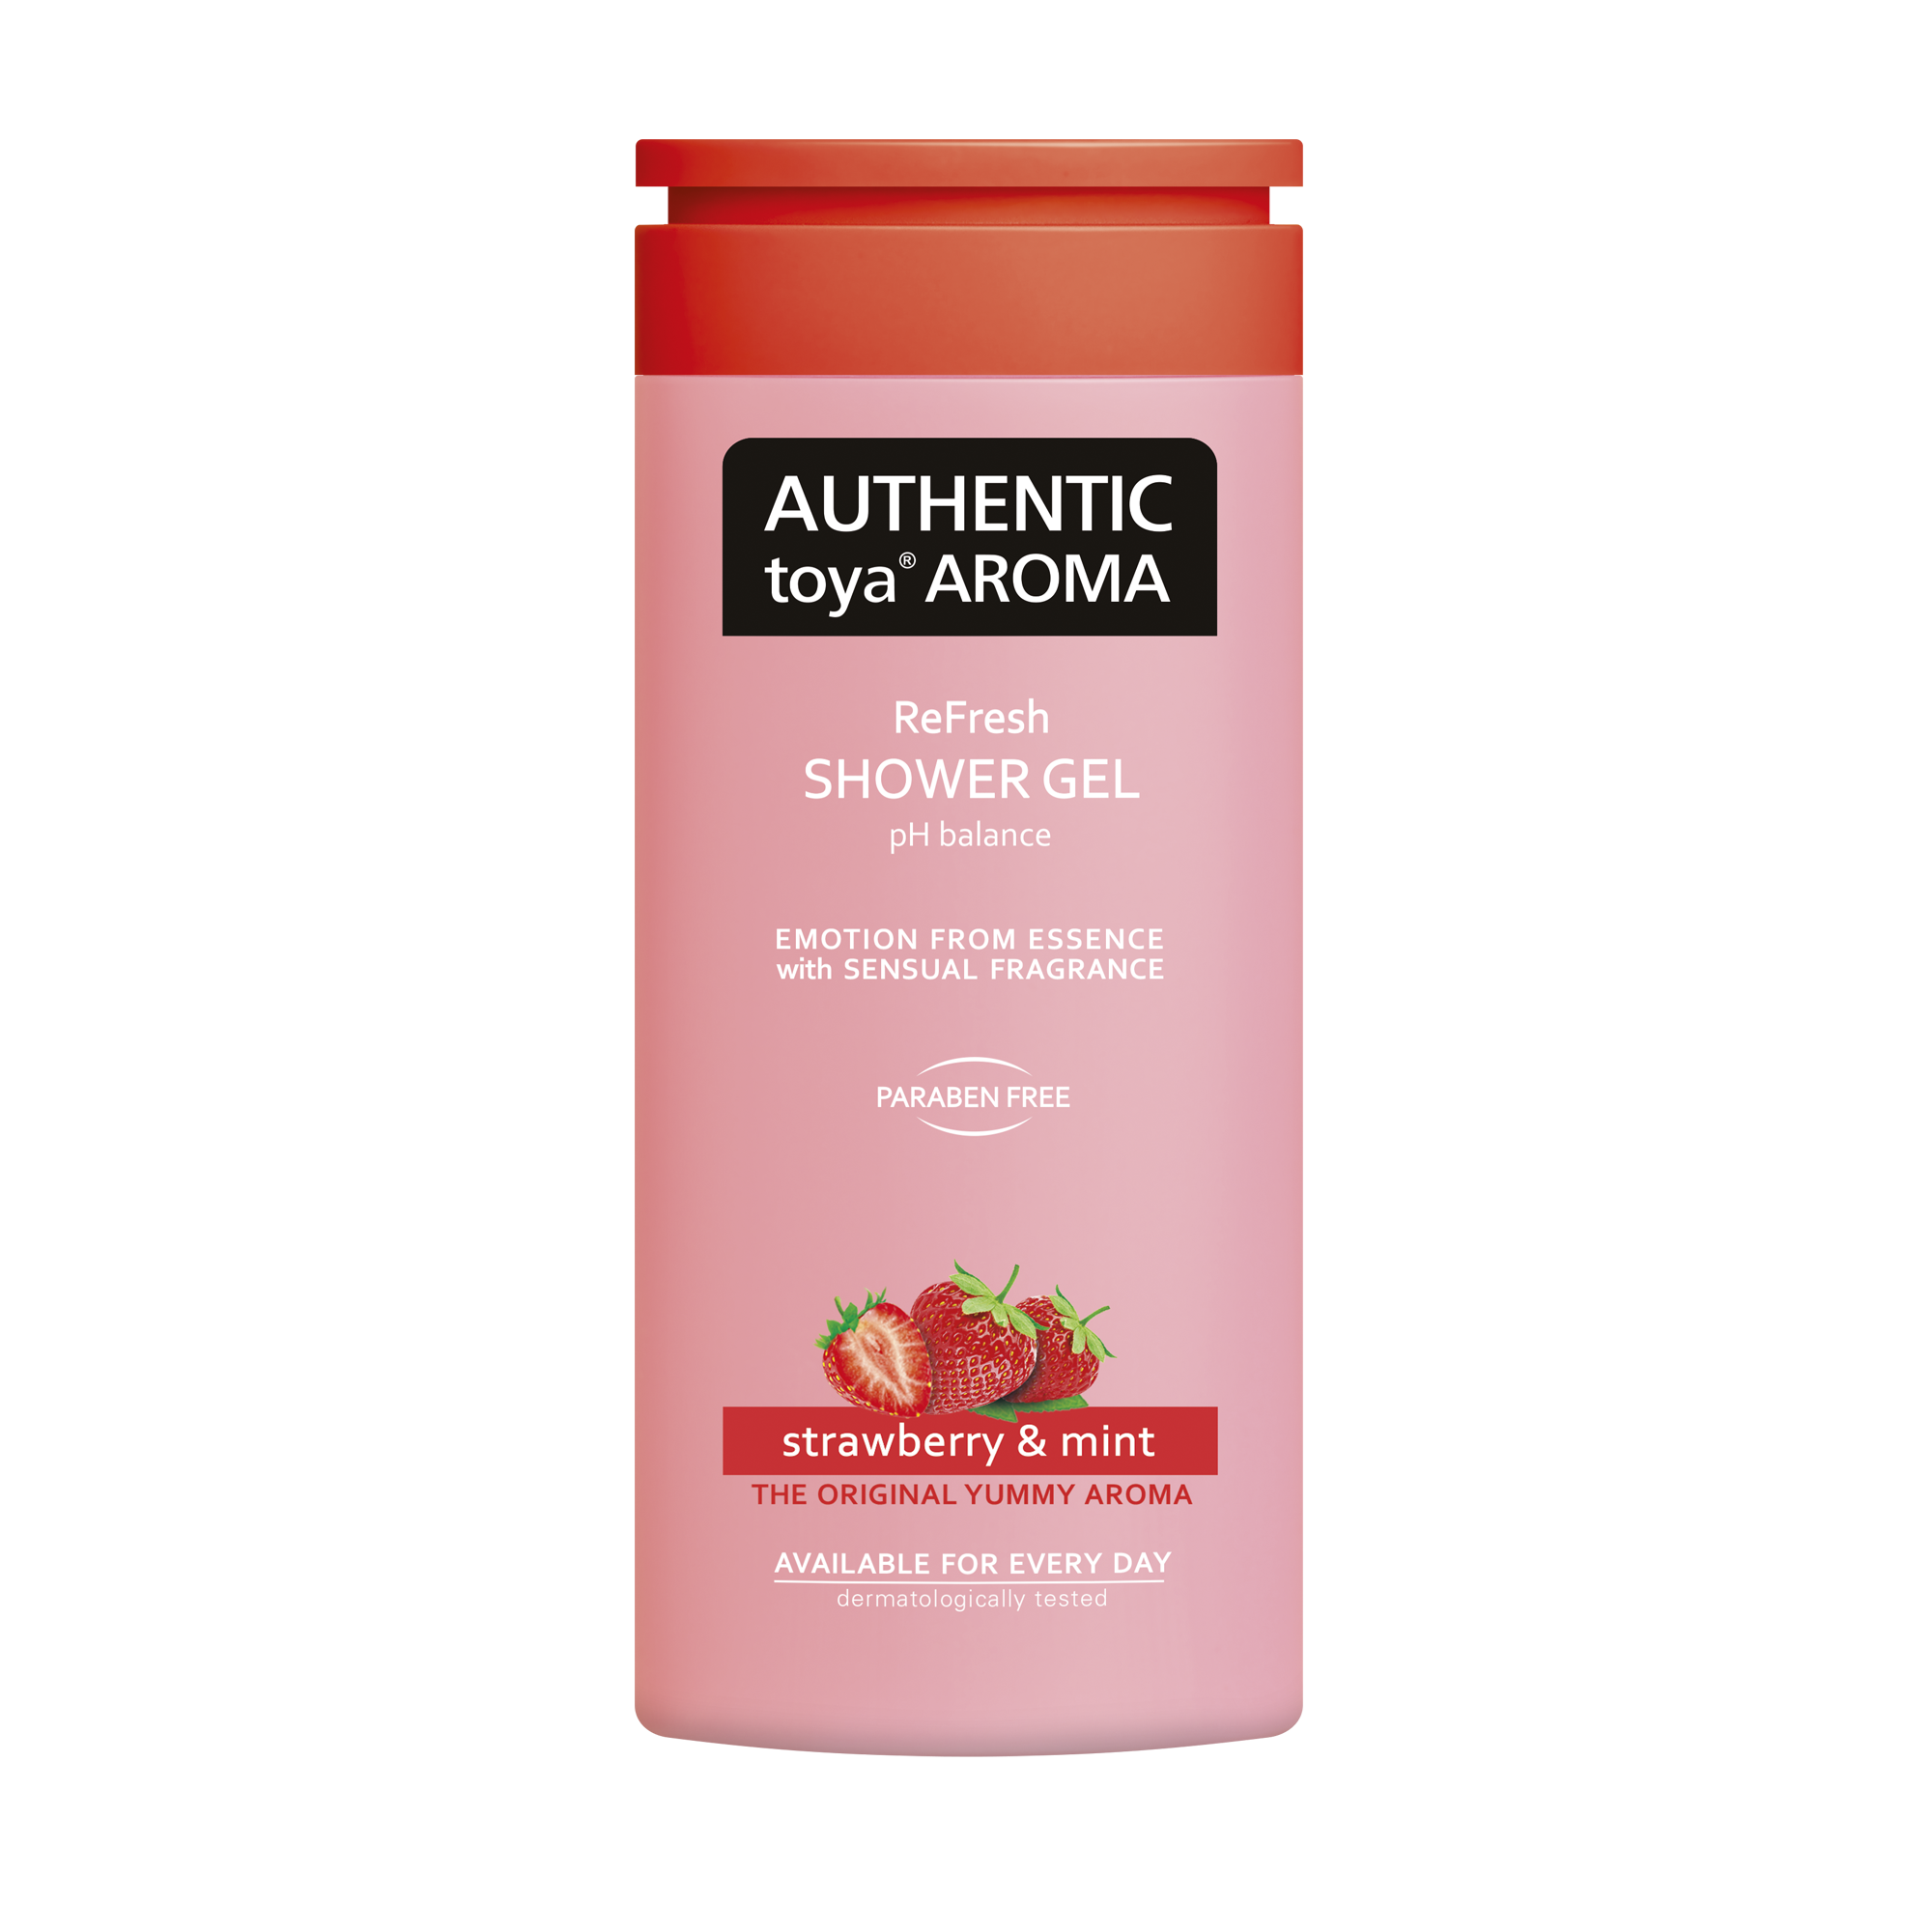 AUTHENTIC toya AROMA – sprchový gel ginger & lemongrass